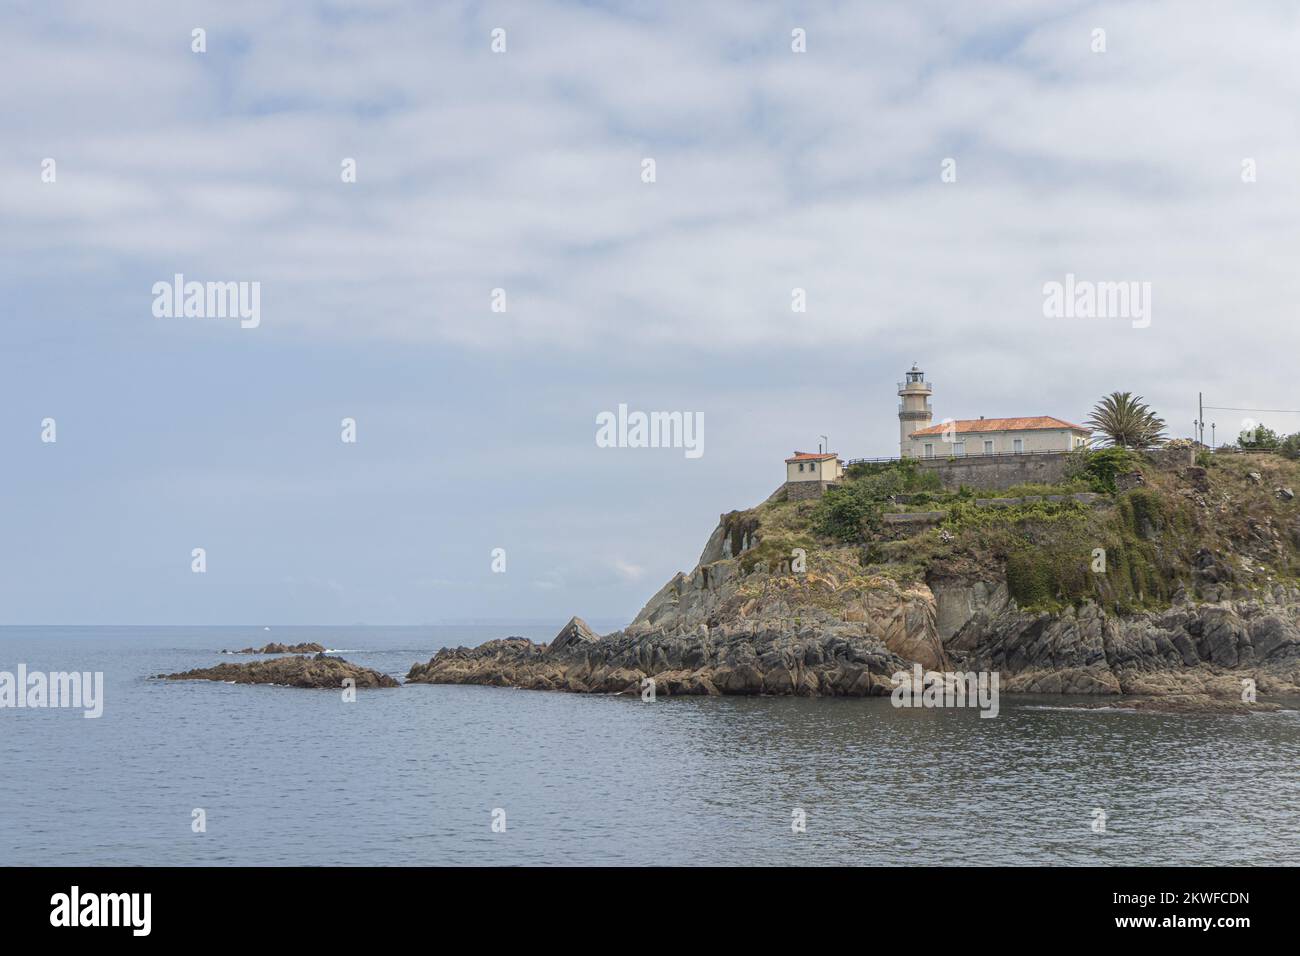 Faro de Cudillero (Lighthouse de Cudillero), Cudillero village (AKA Pixueto), Asturias, Spain Stock Photo